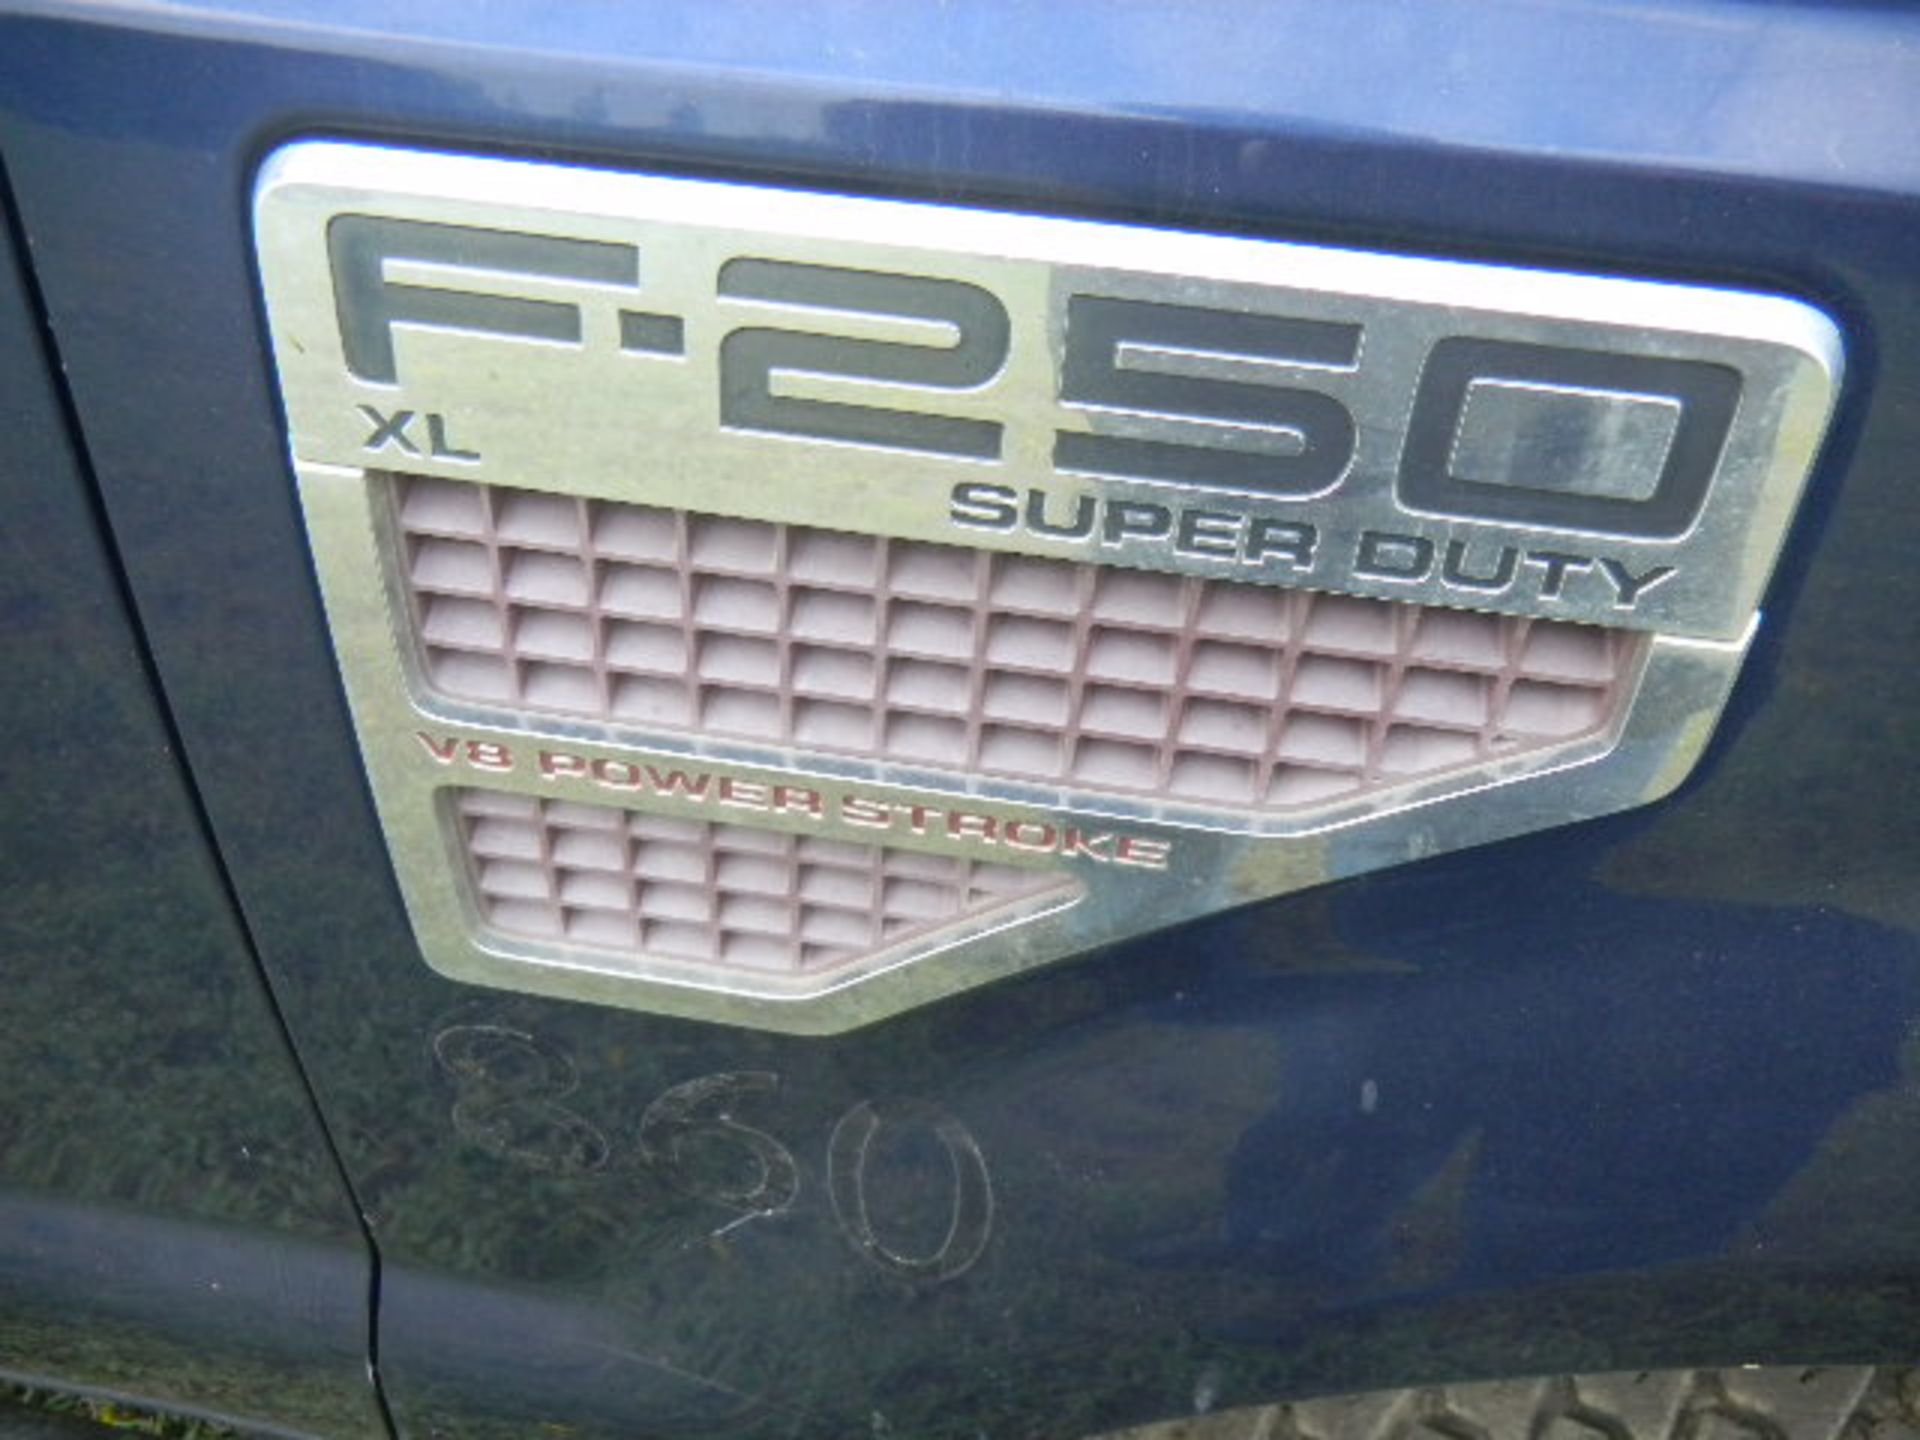 2008 Ford F250 Super Duty 4x4 Pickup - Asset I.D. #860 - Last of Vin (EC52447) - Image 9 of 10